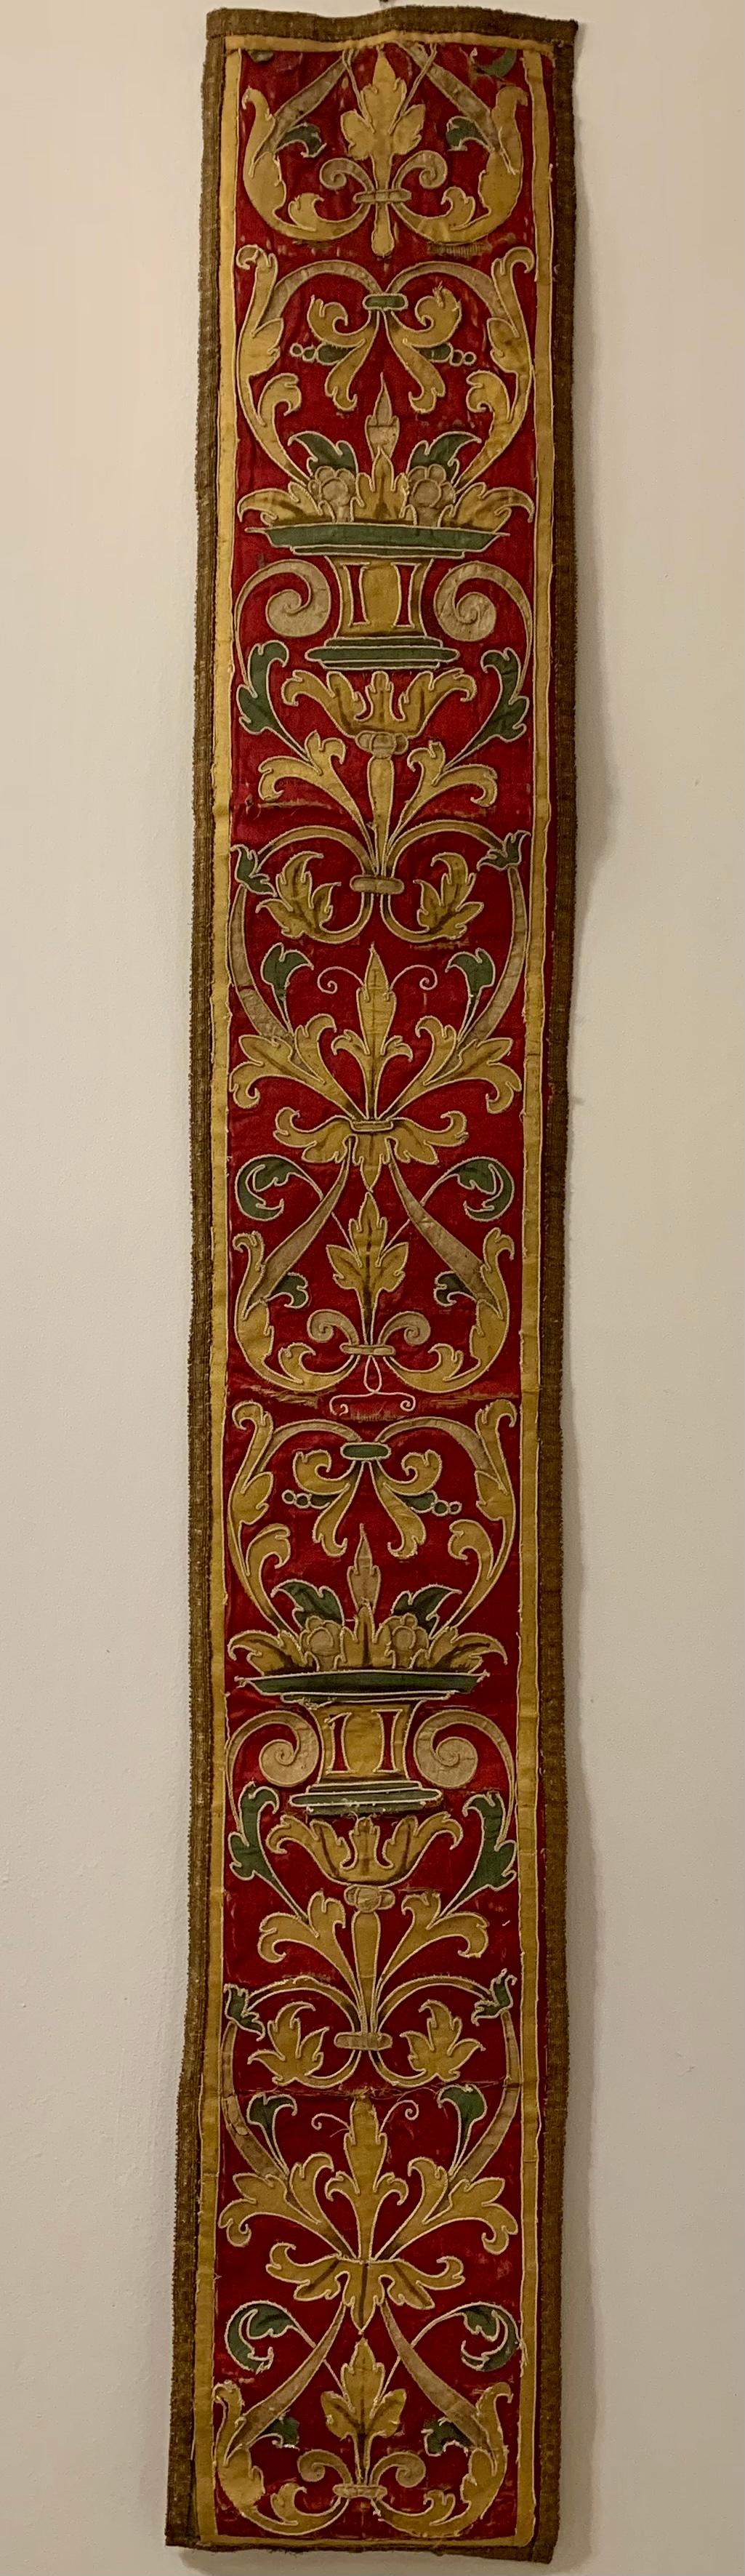 Antique 17th Century Baroque Italian Silk, Metallic Thread Embroidery Panel For Sale 7